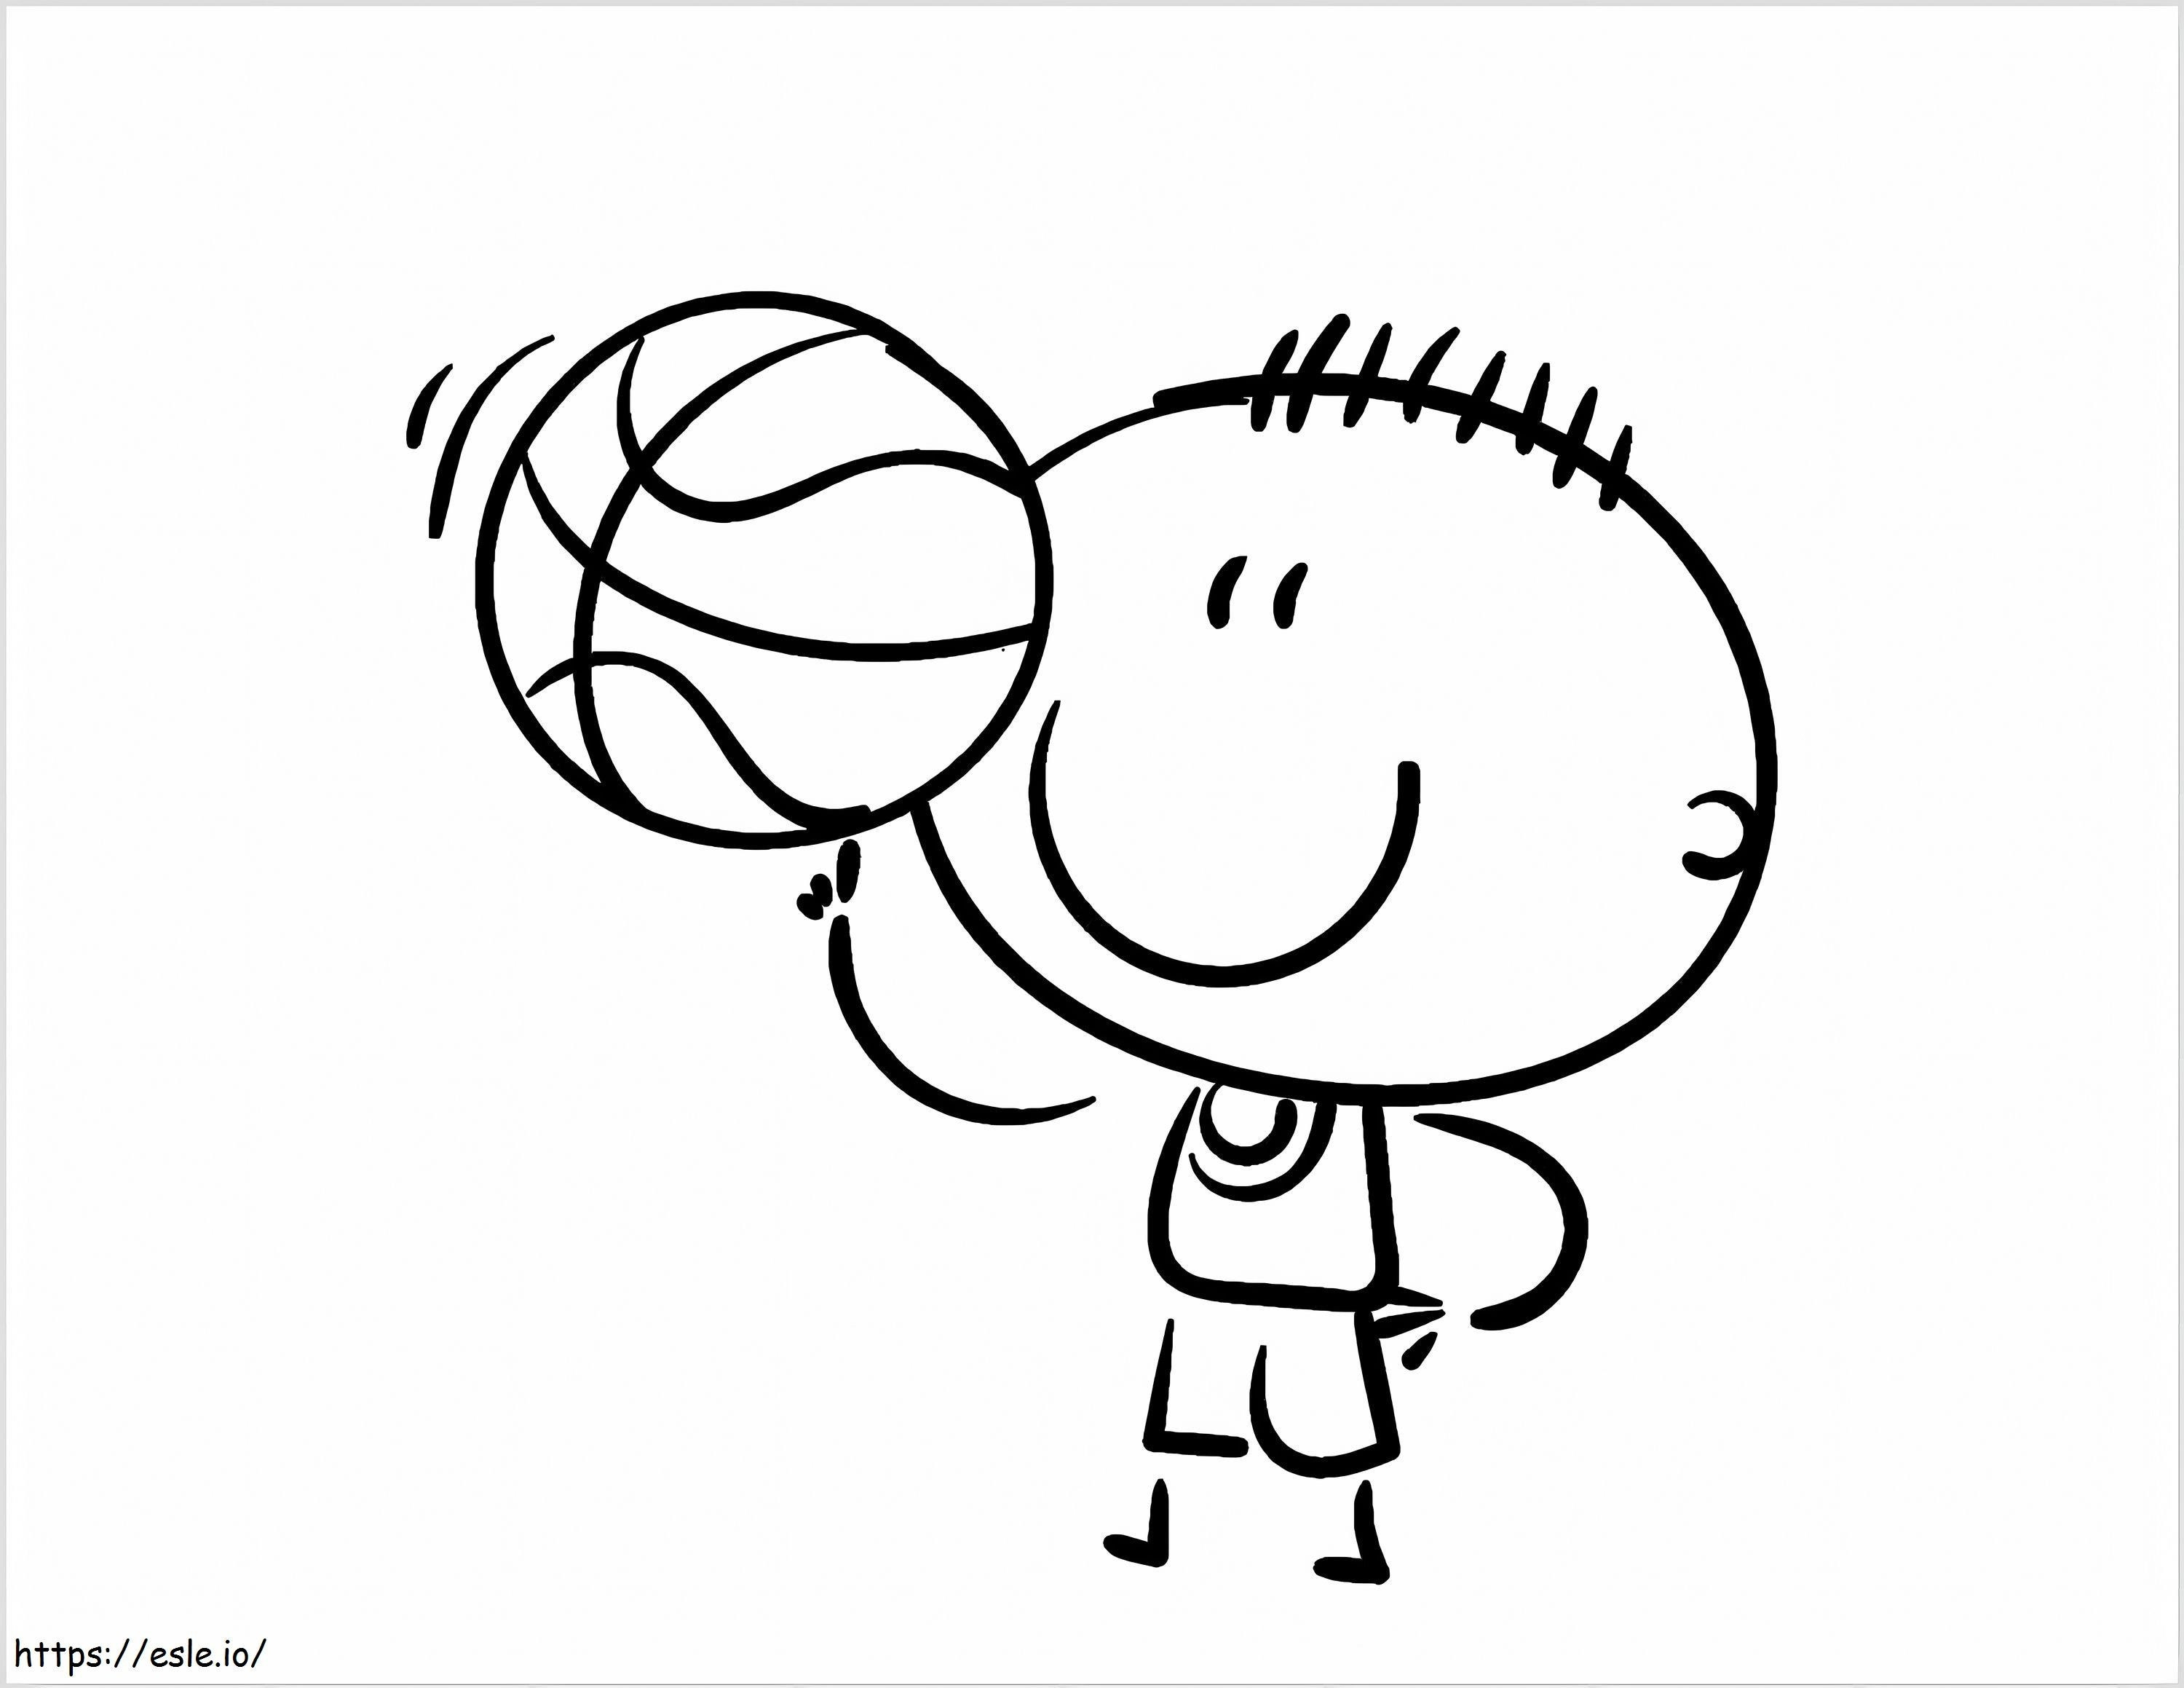 Rotating Basketball coloring page